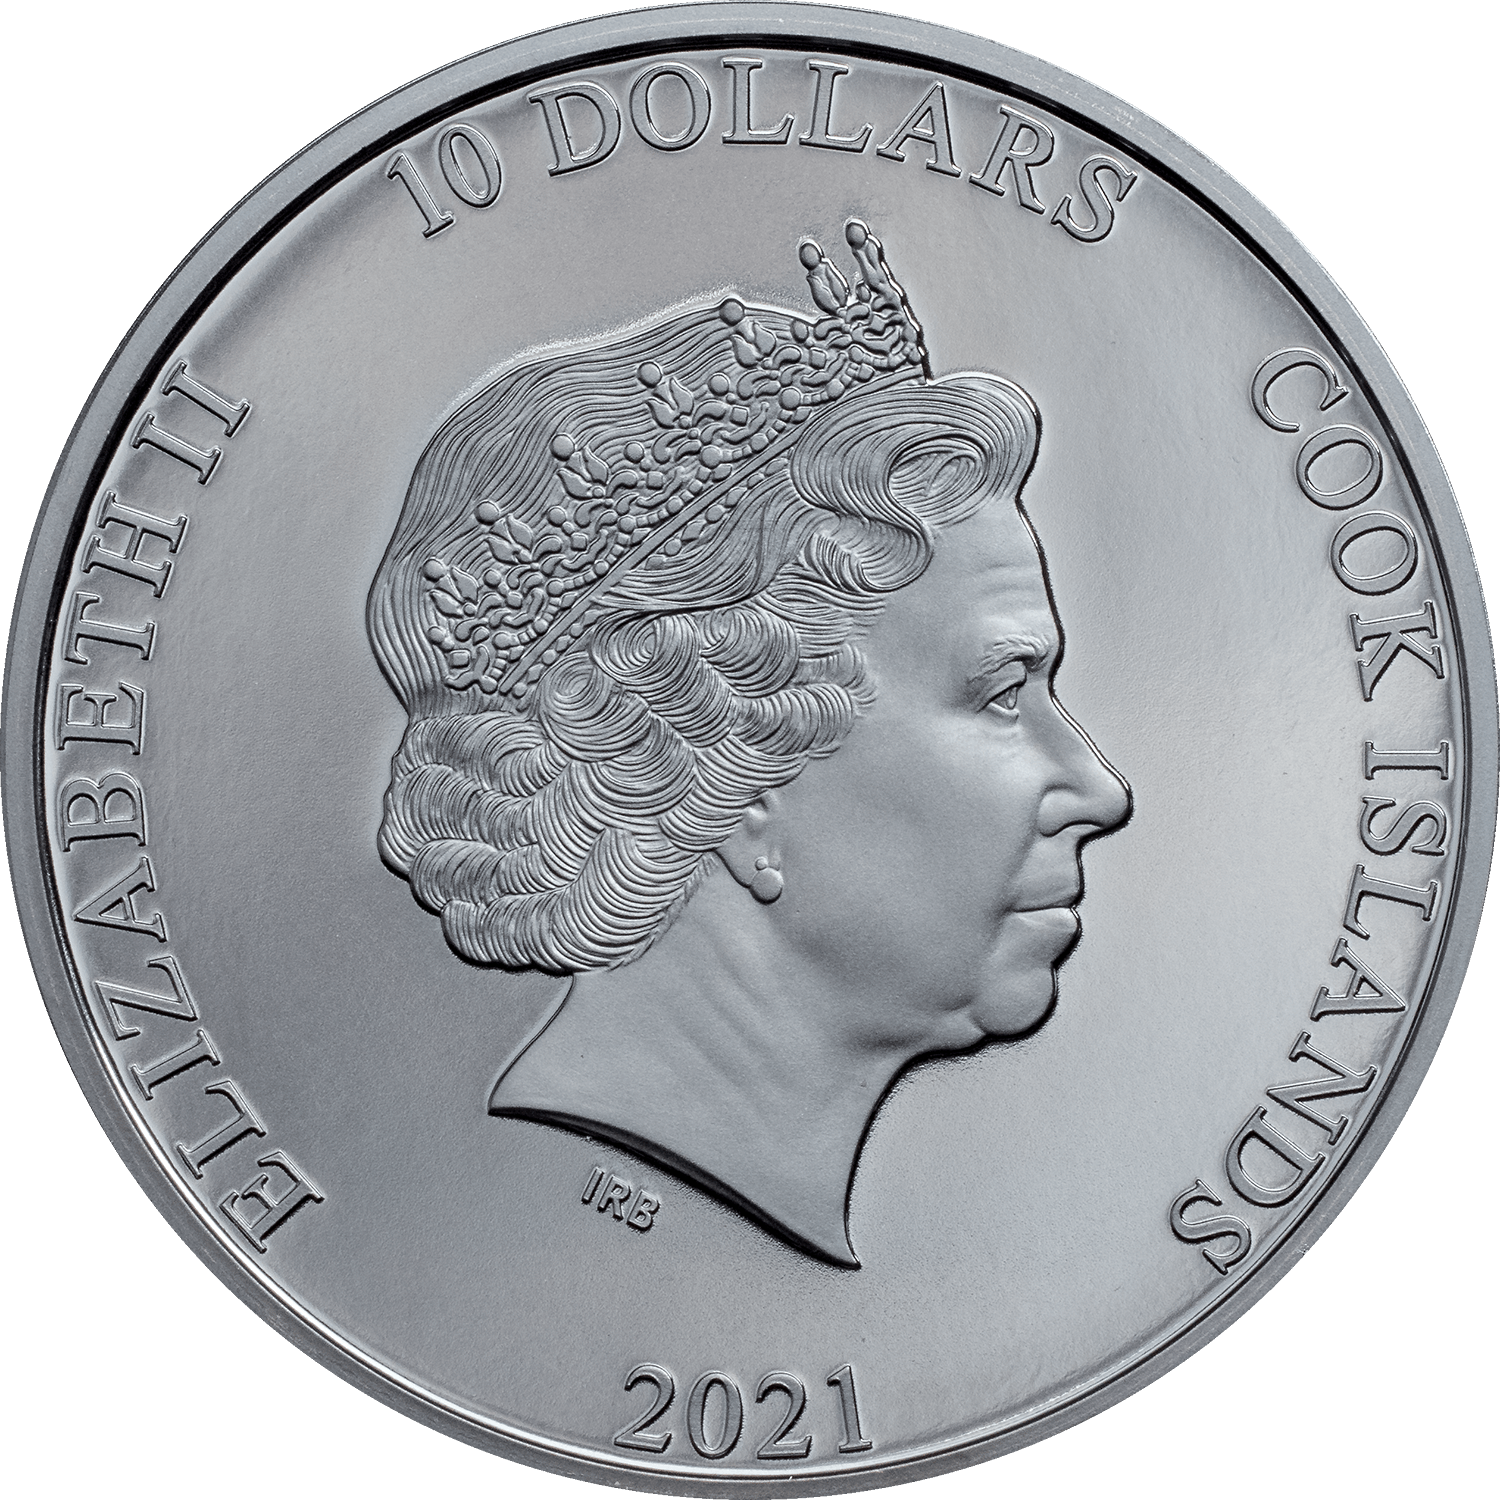 CLASSIC CAR Open Roads 2 Oz Silver Coin $10 Cook Islands 2021 - PARTHAVA COIN